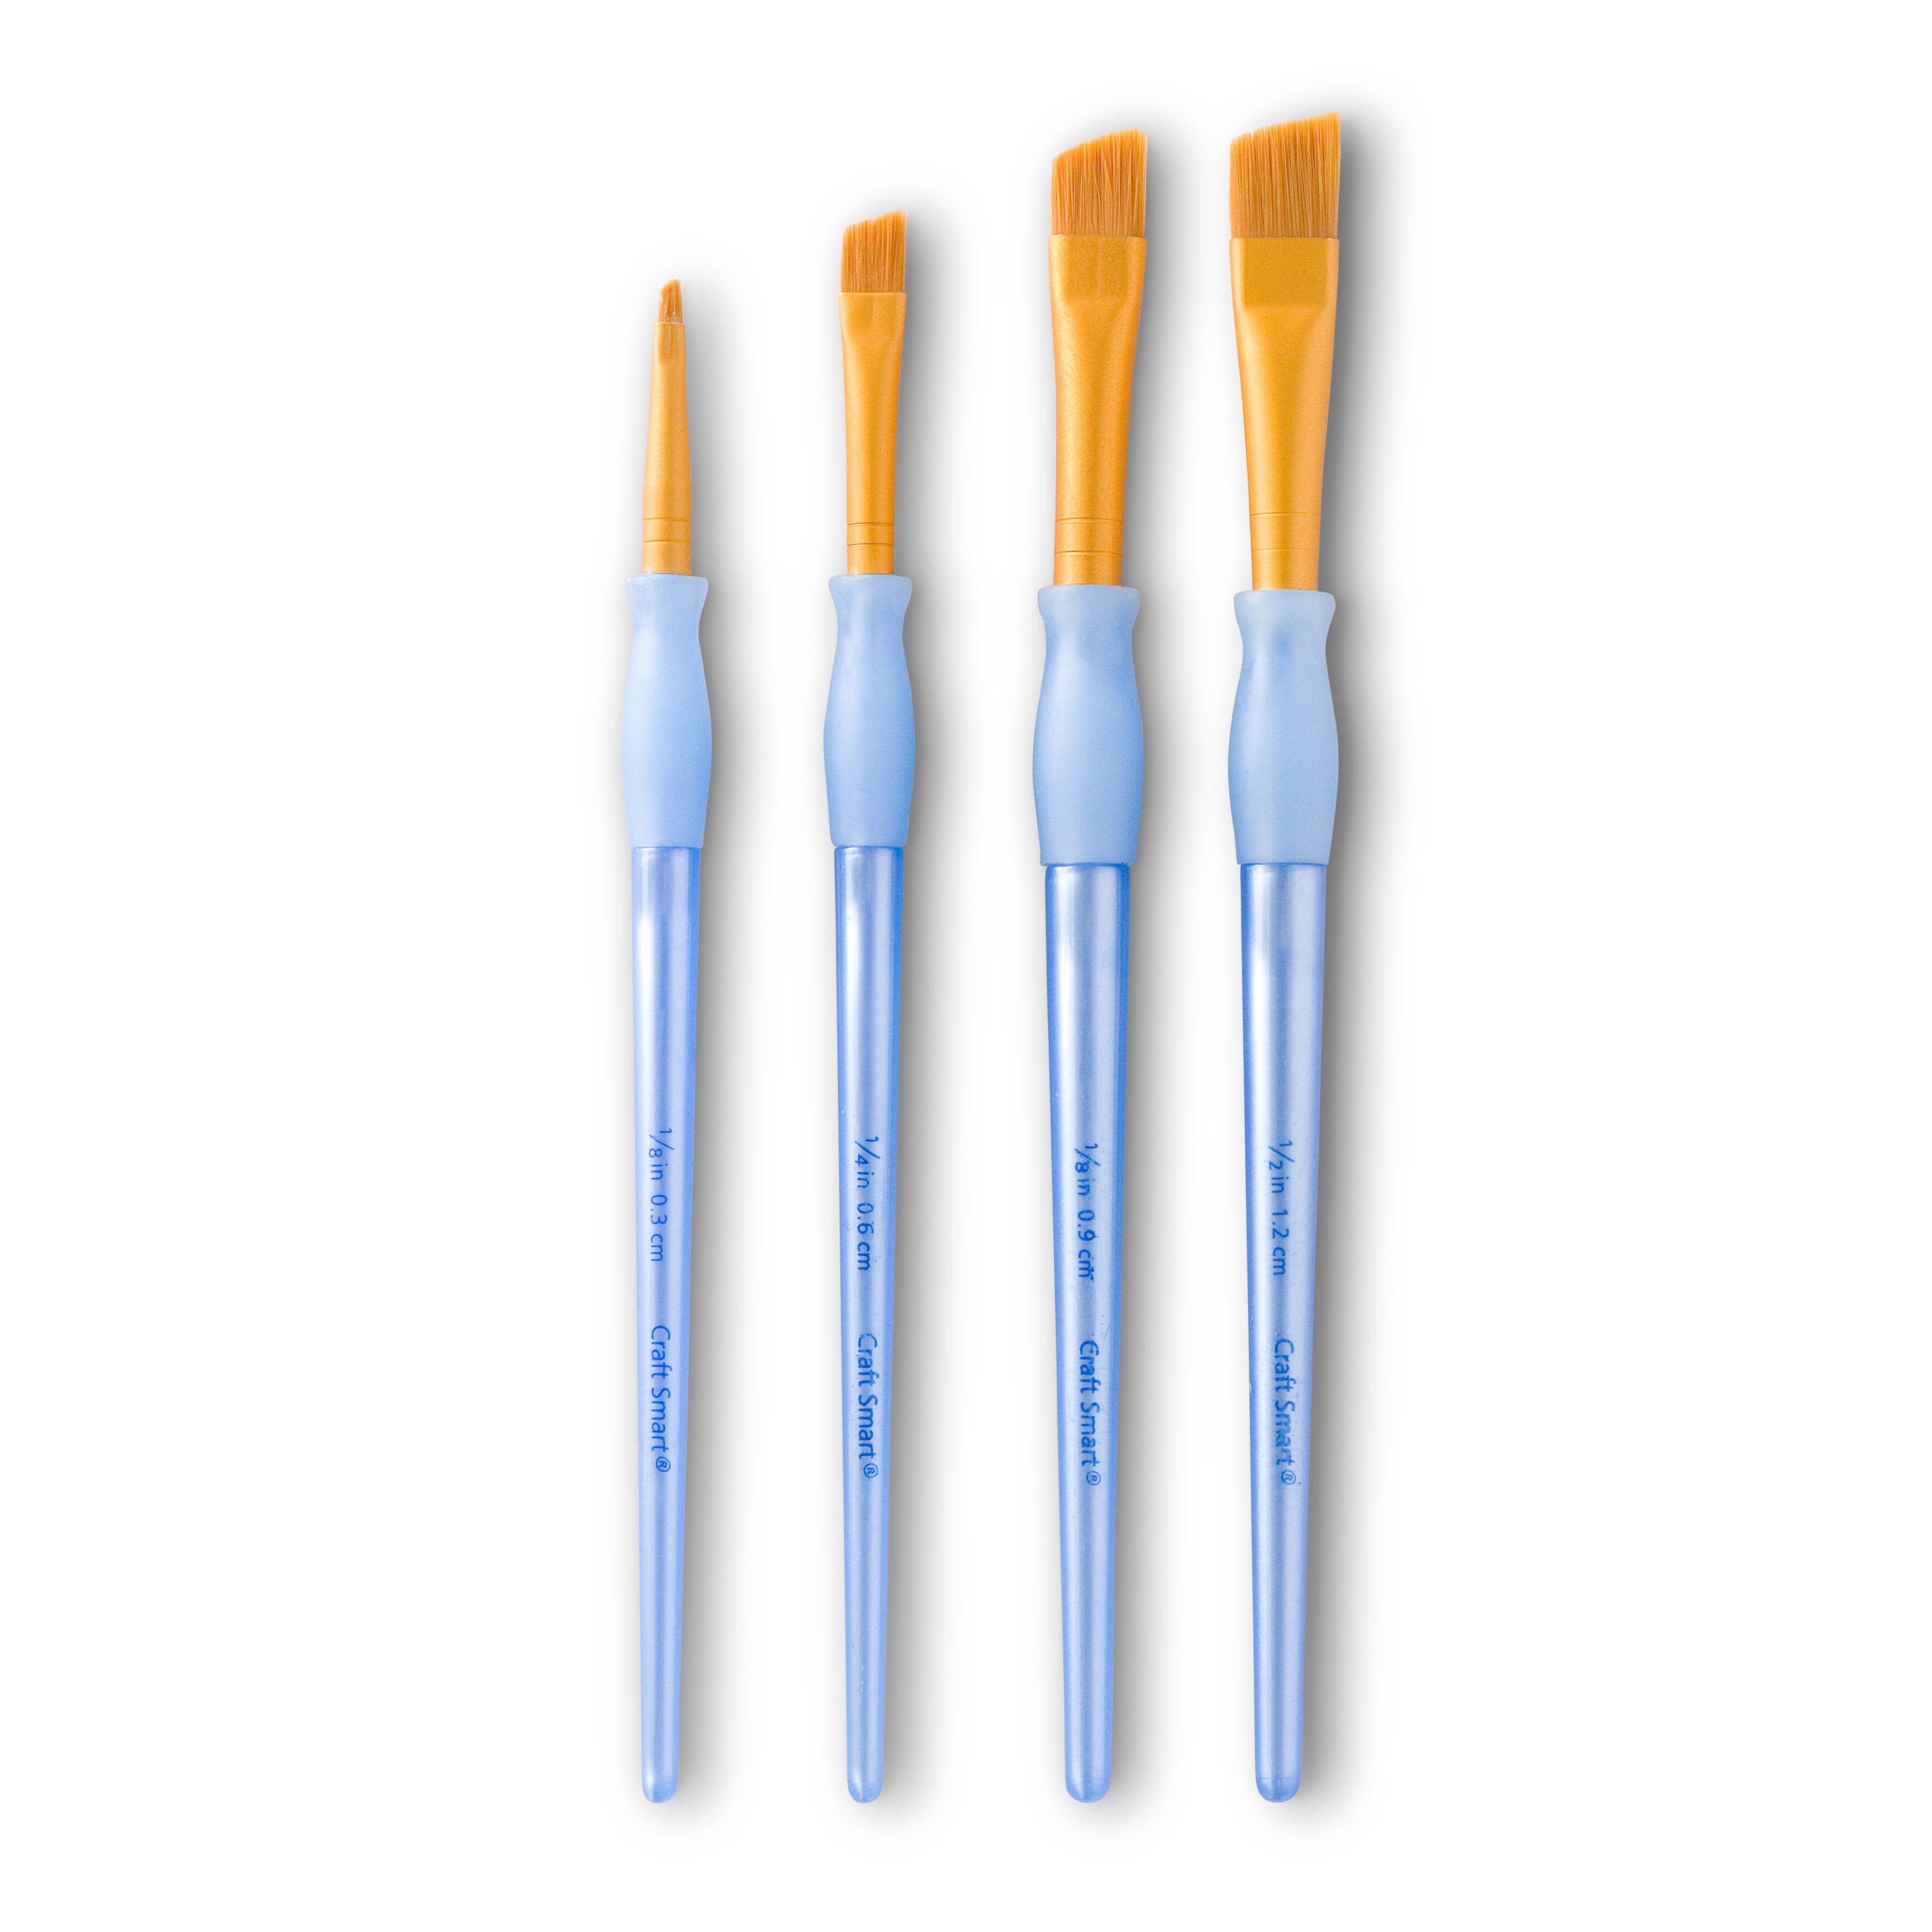 9 Packs: 4 ct. (36 total) Golden Taklon Angular Brush Set by Craft Smart&#xAE;